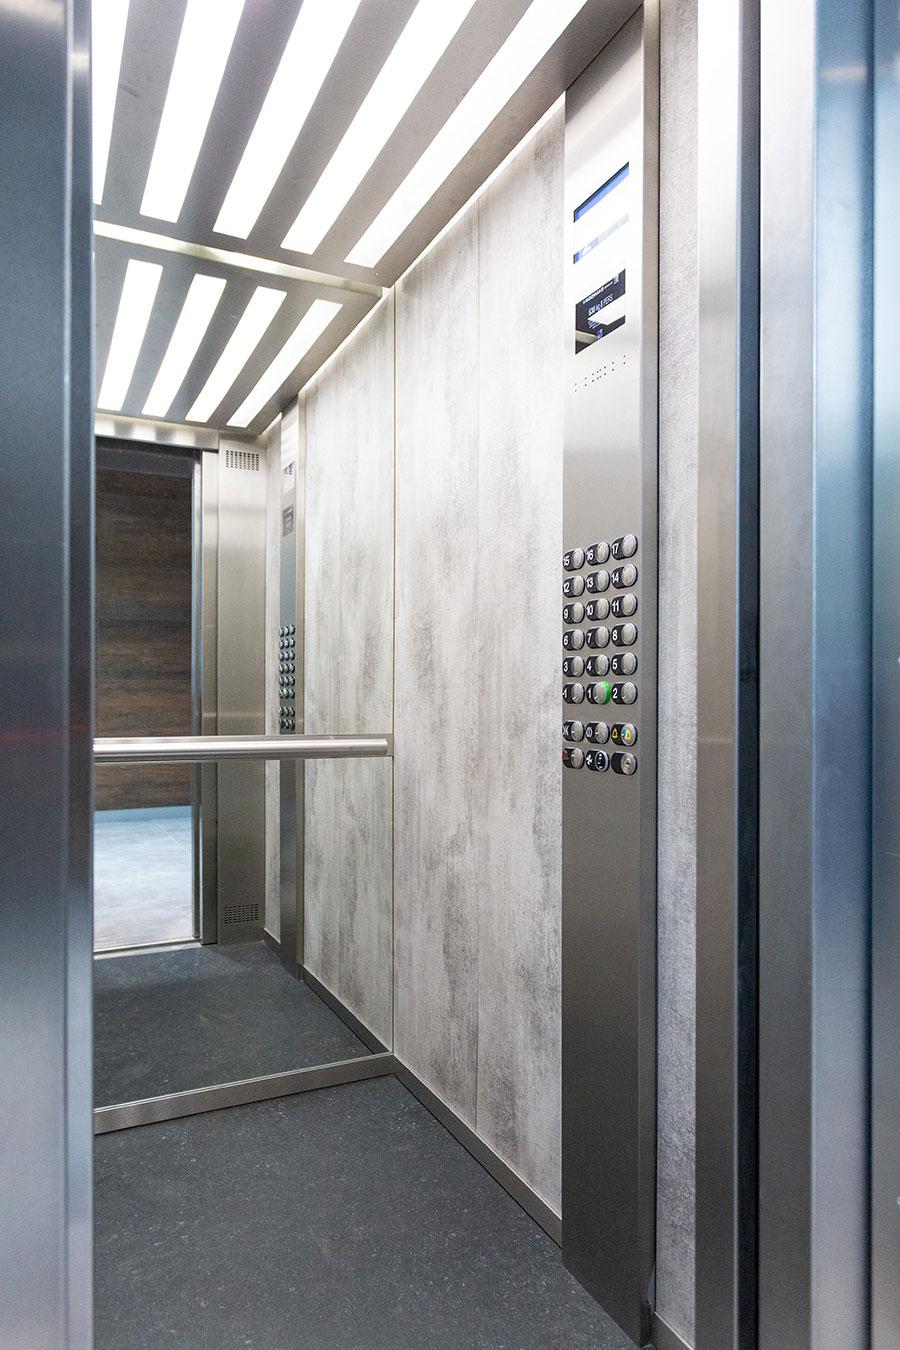 Elevator Cabins